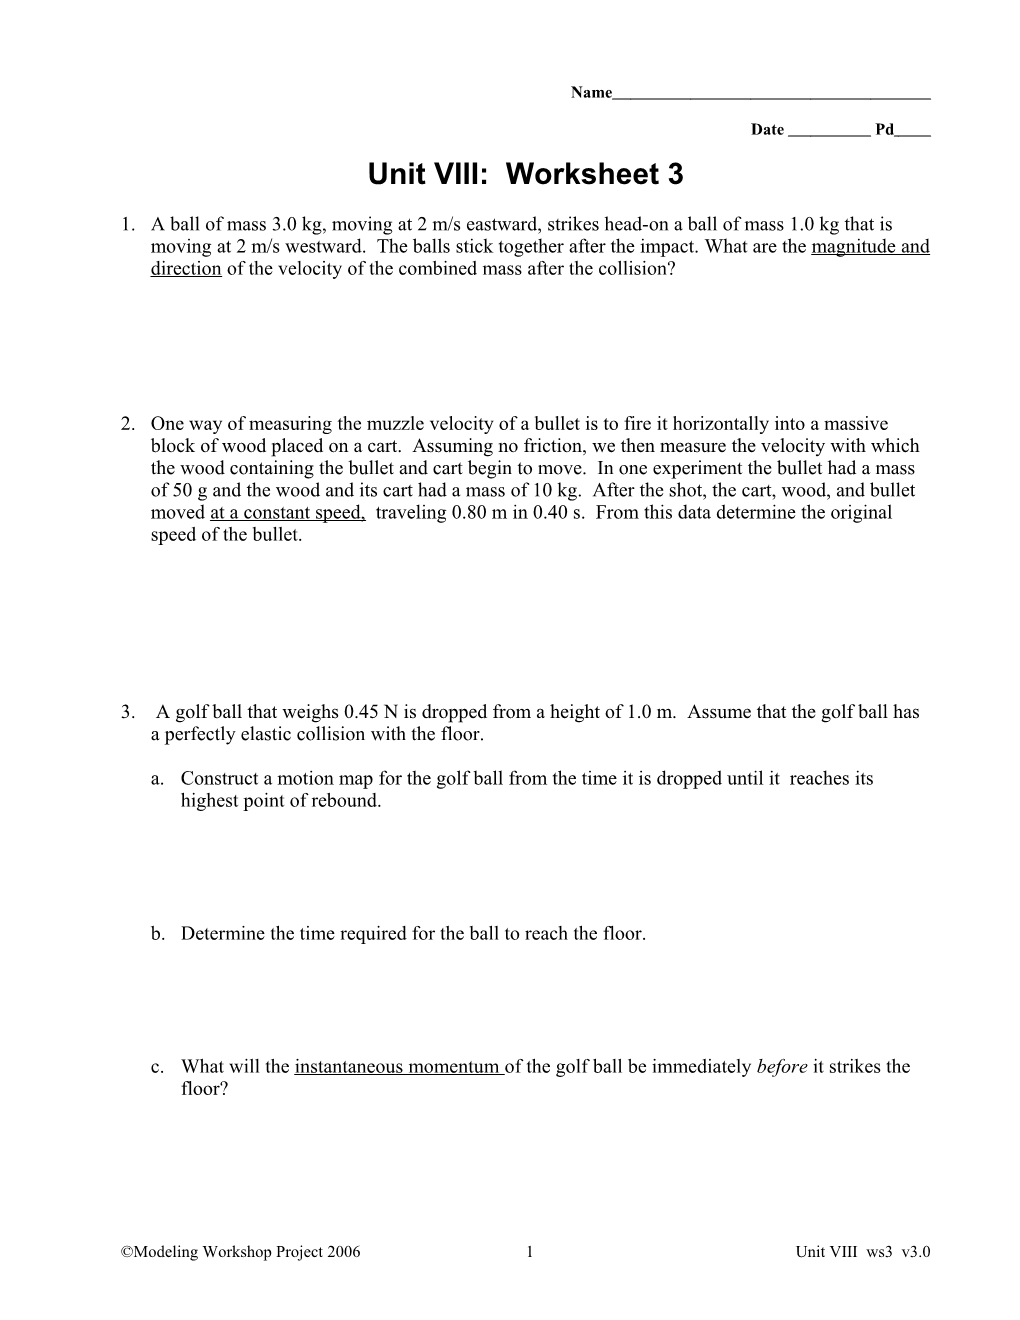 Unit VIII: Worksheet 3